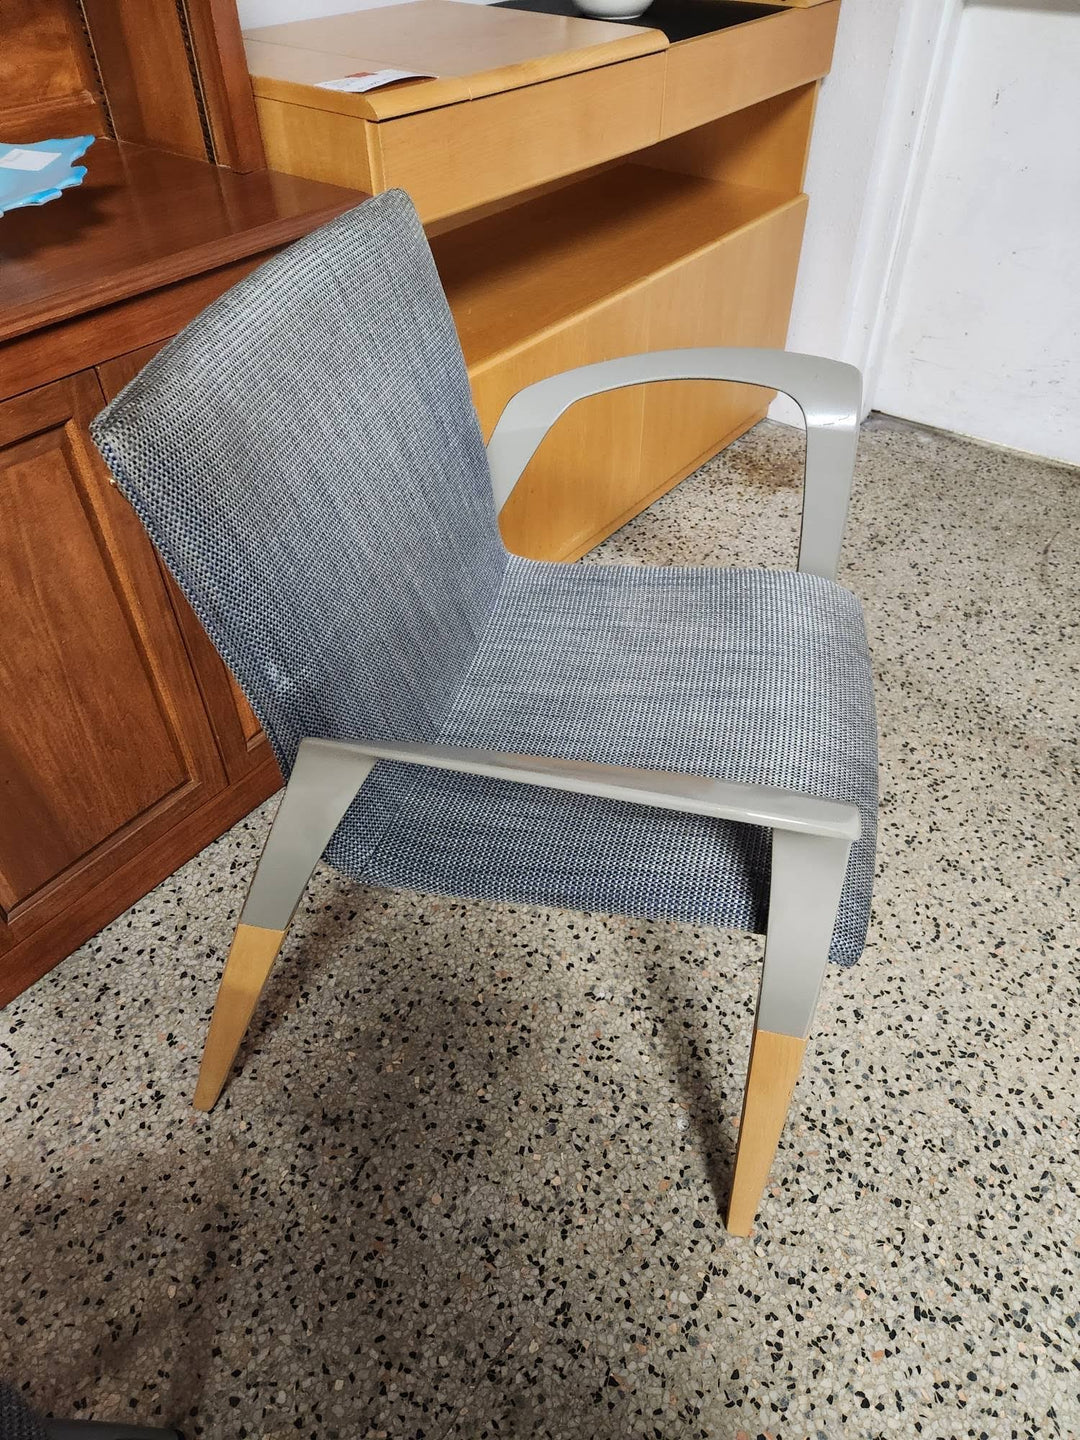 Desk Chair Grey